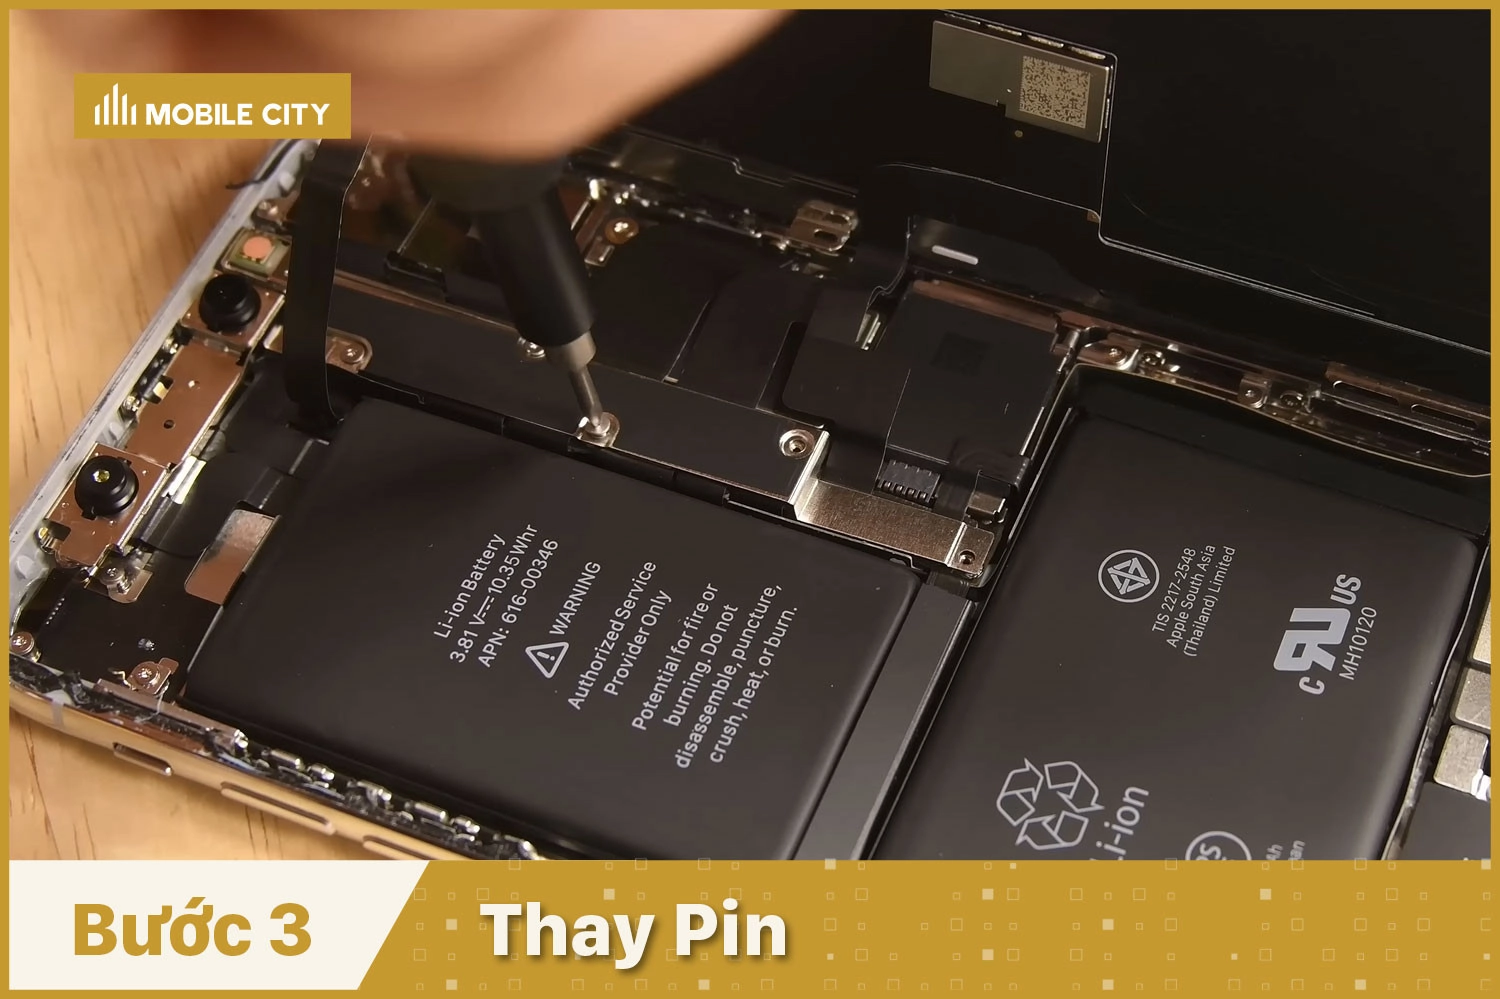 Thay Pin iCare iPhone X, Thay Pin